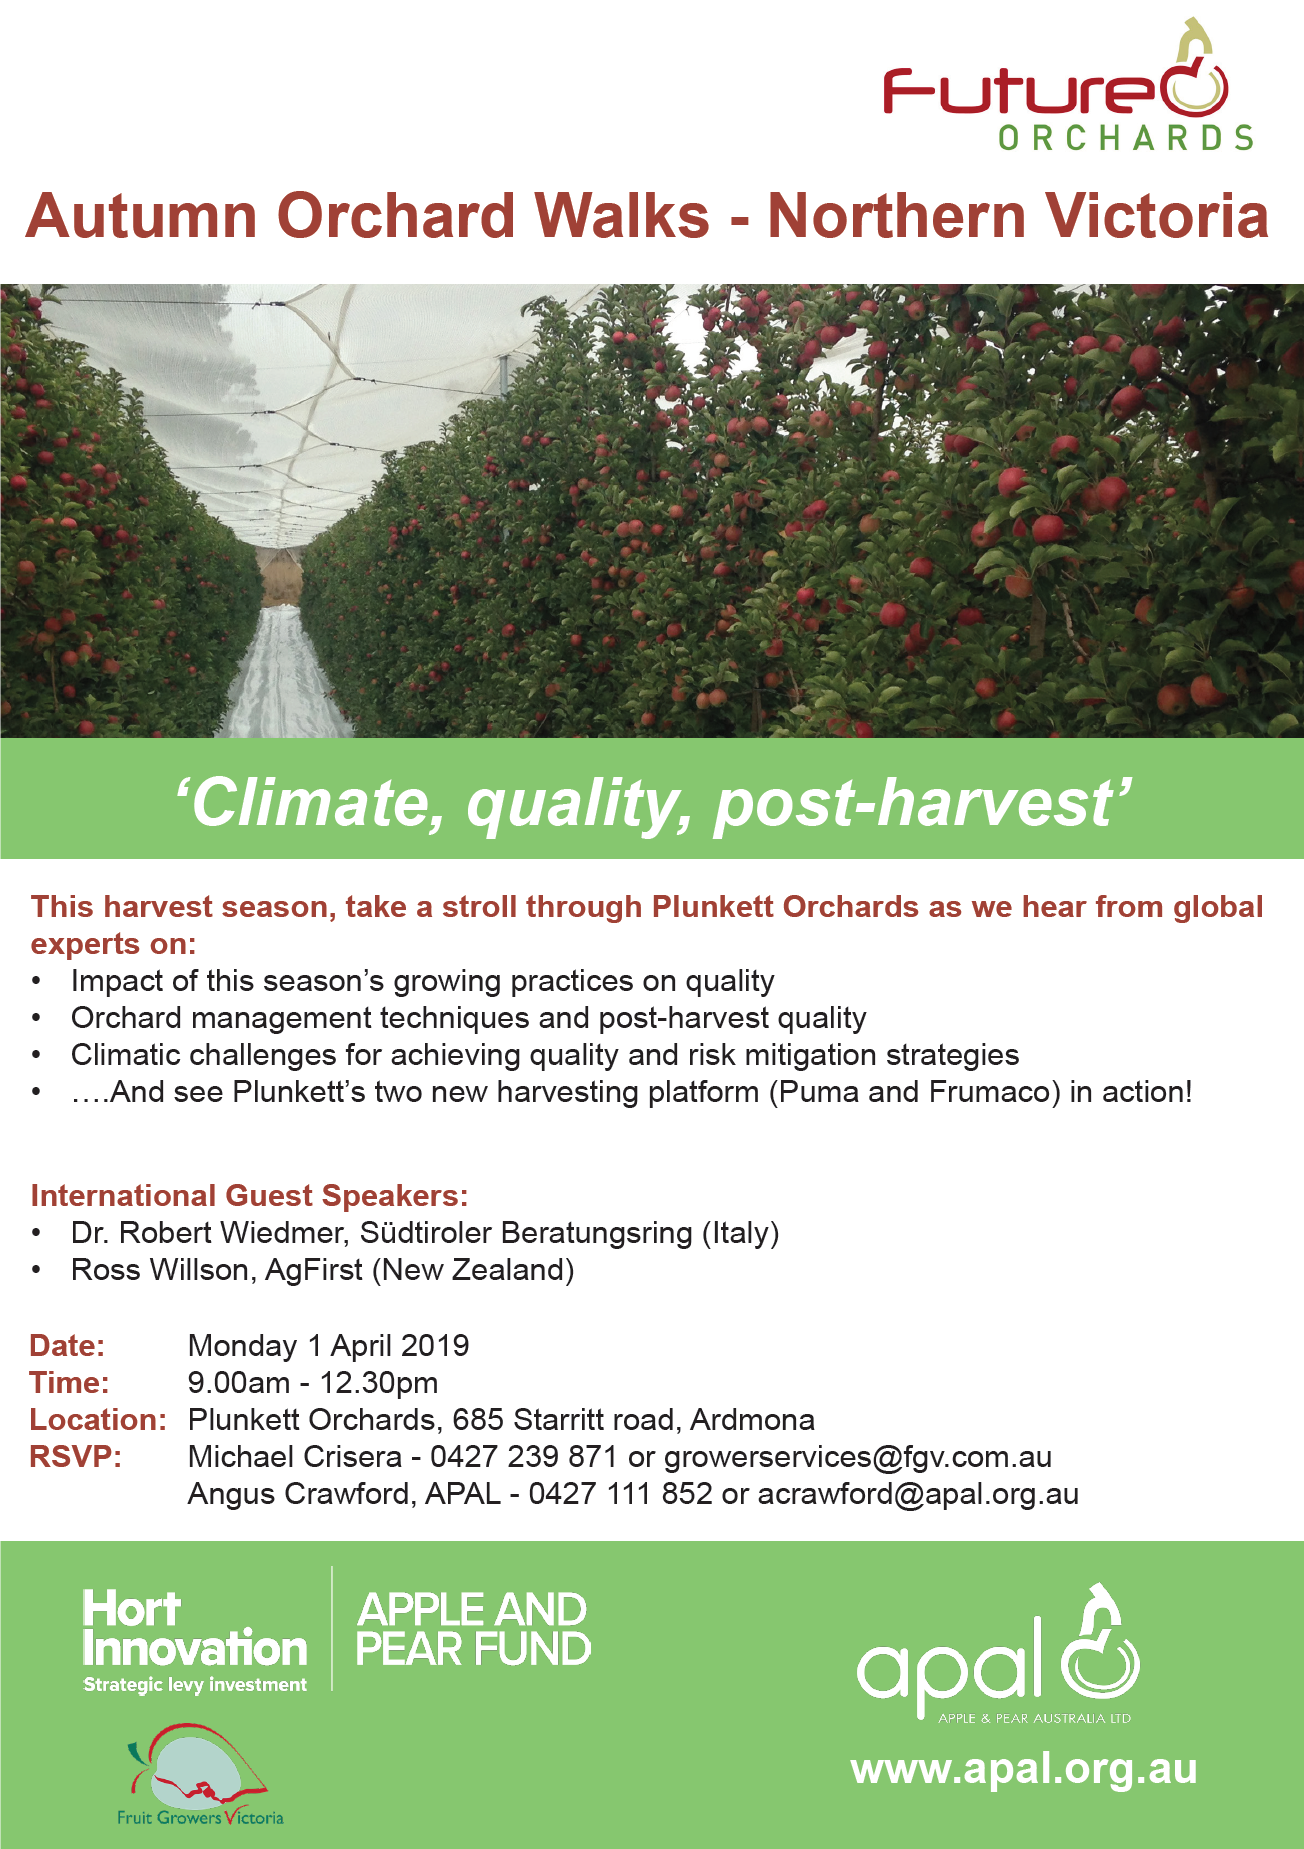 Future Orchards 'Autumn Orchard Walks- Northern Victoria'- Monday 1st April 2019, 9:00am-12:30pm